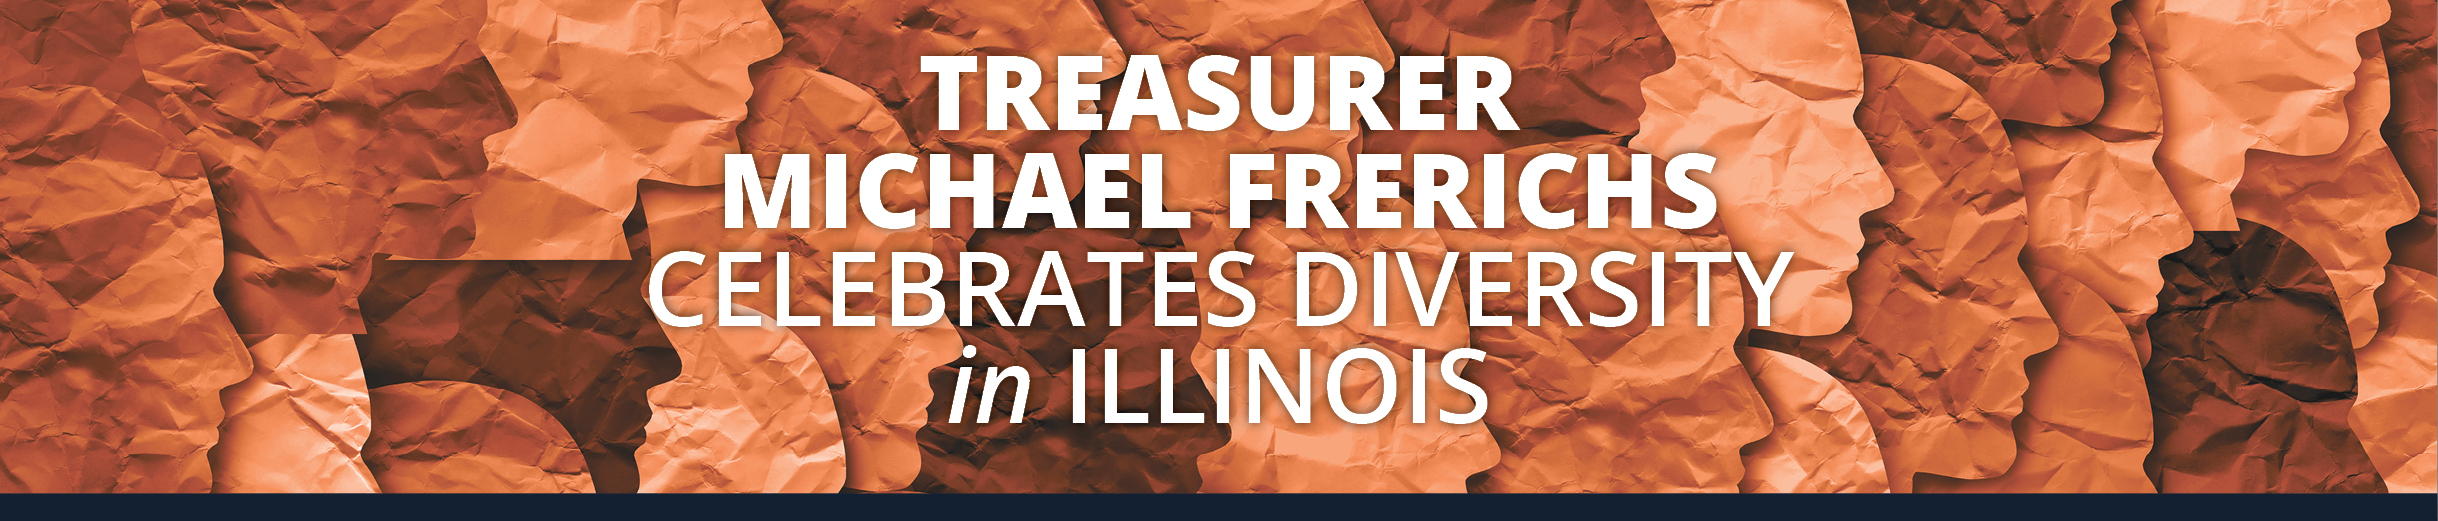 Treasurer Michael Frerichs Celebrates Diversity in Illinois